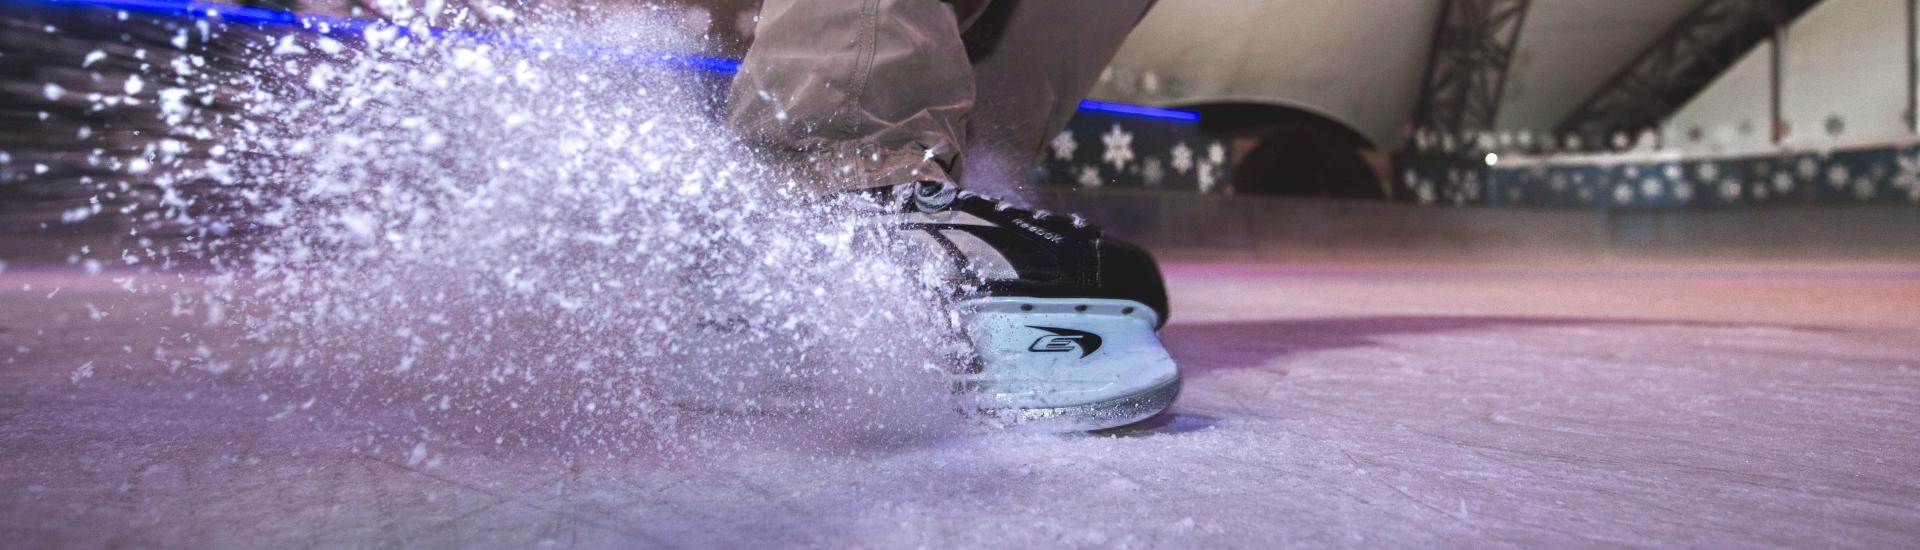 Up close shot of ice skates on ice rink